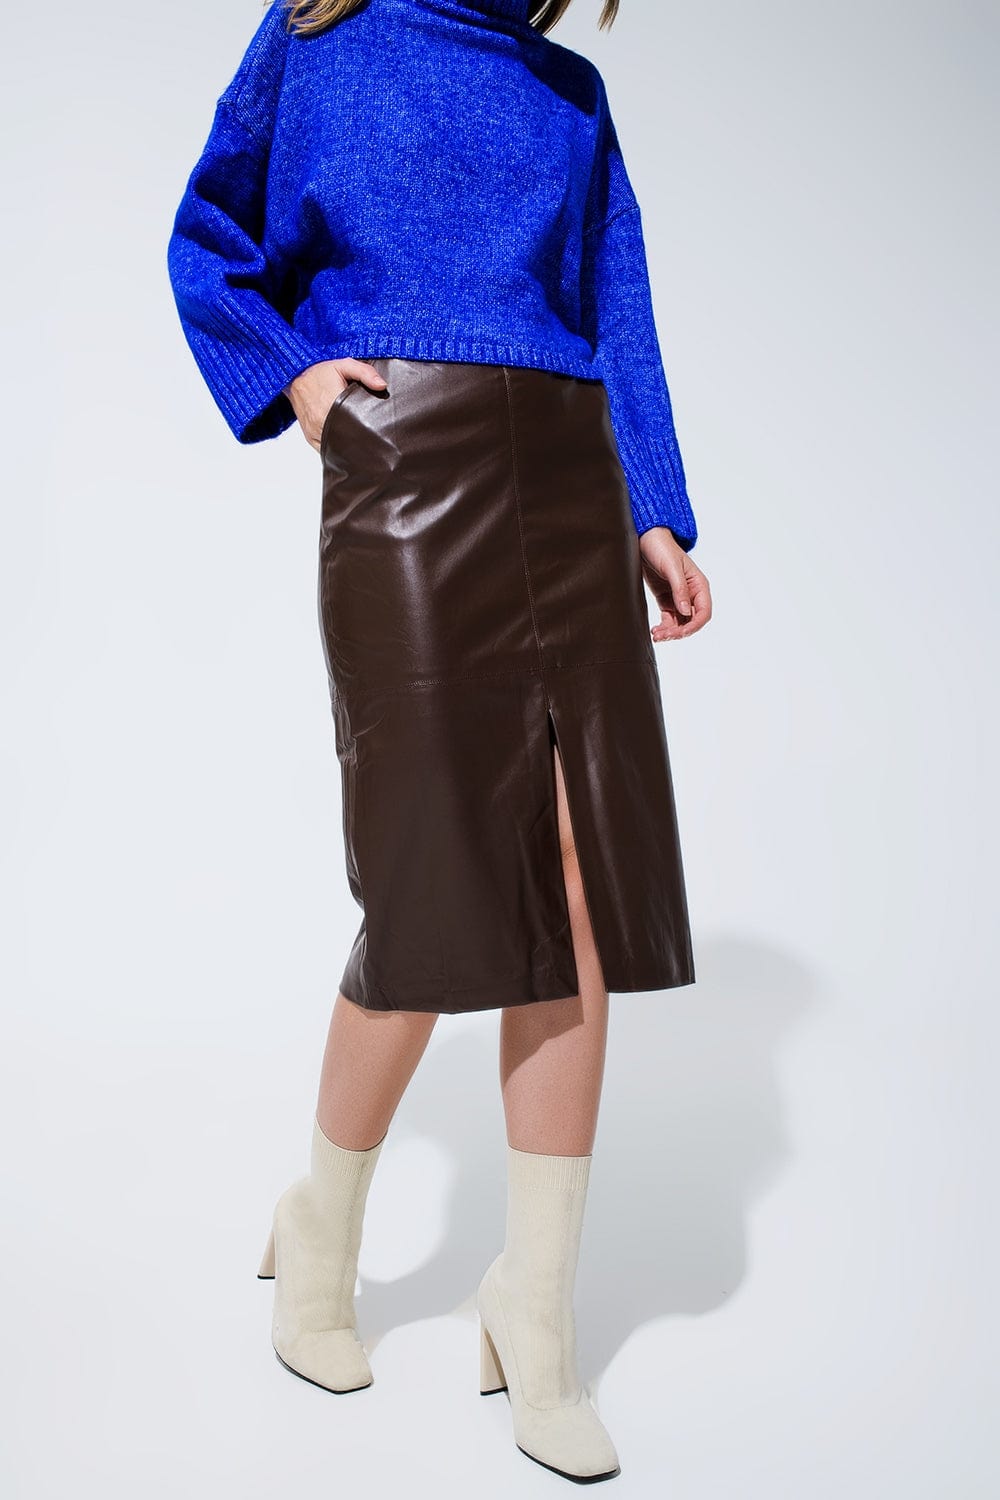 Q2 Women's Skirt Brown Leatherette Pencil Cut Skirt